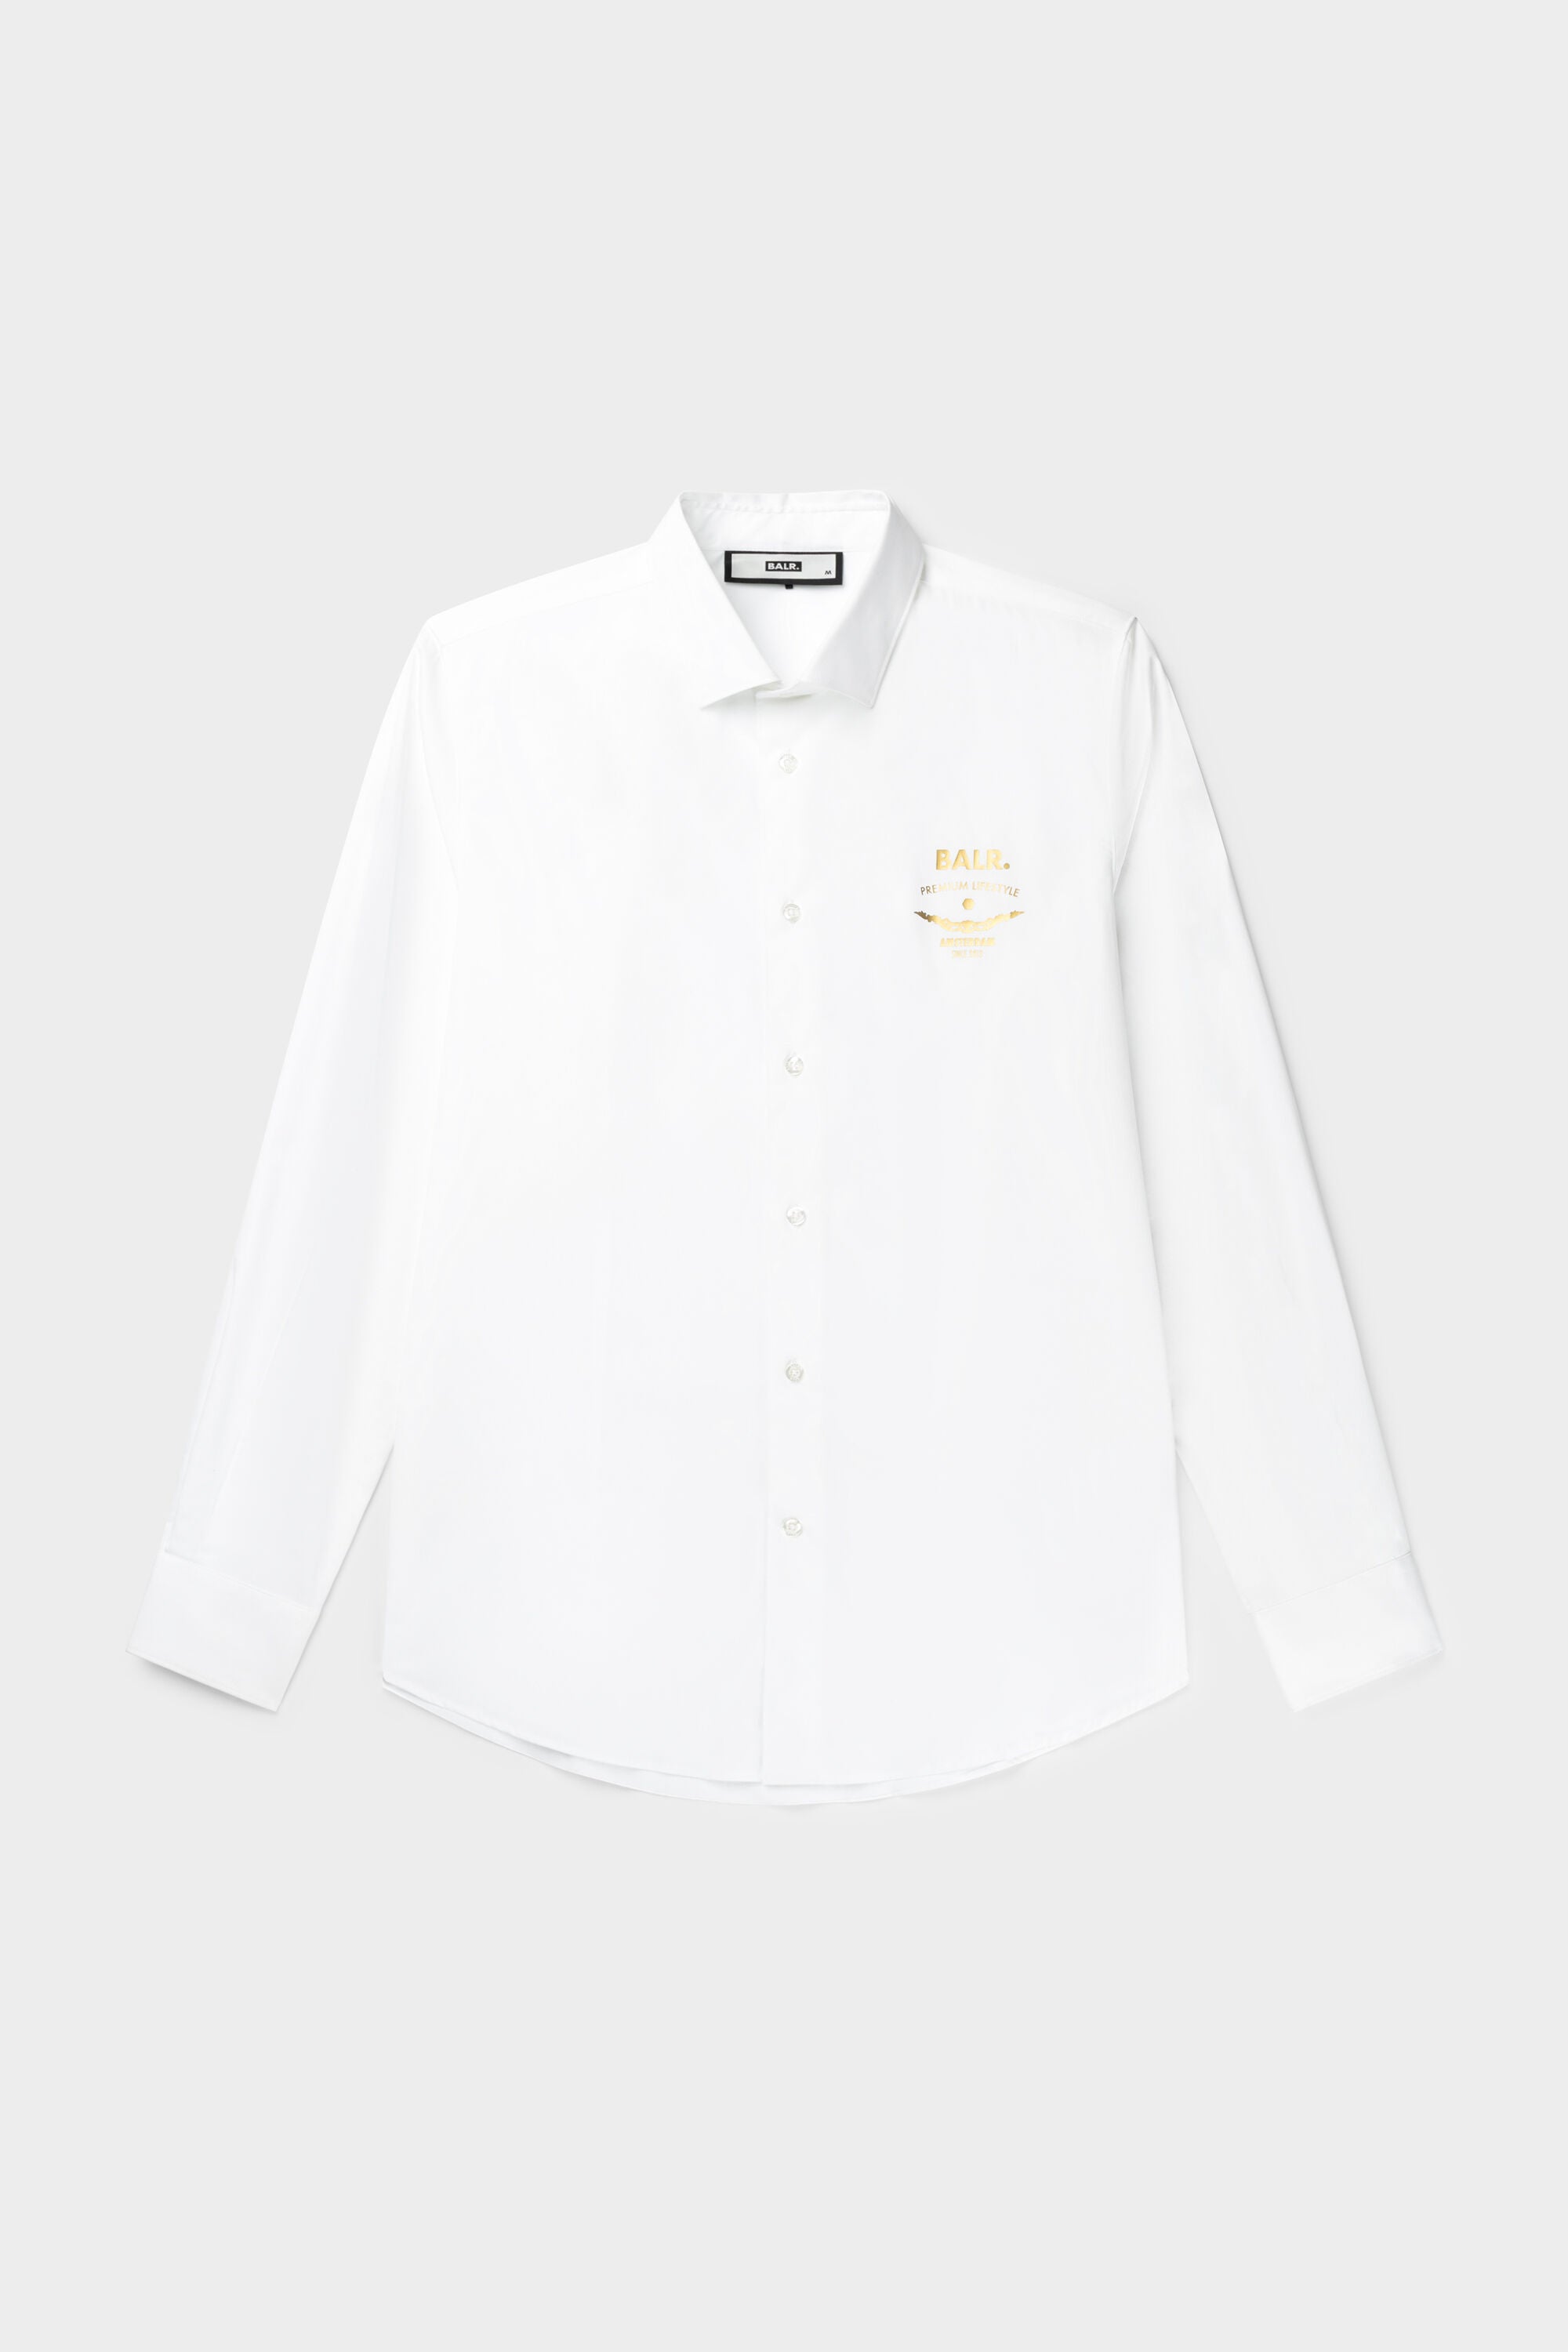 Phillipe Slim Emblem Shirt Bright White